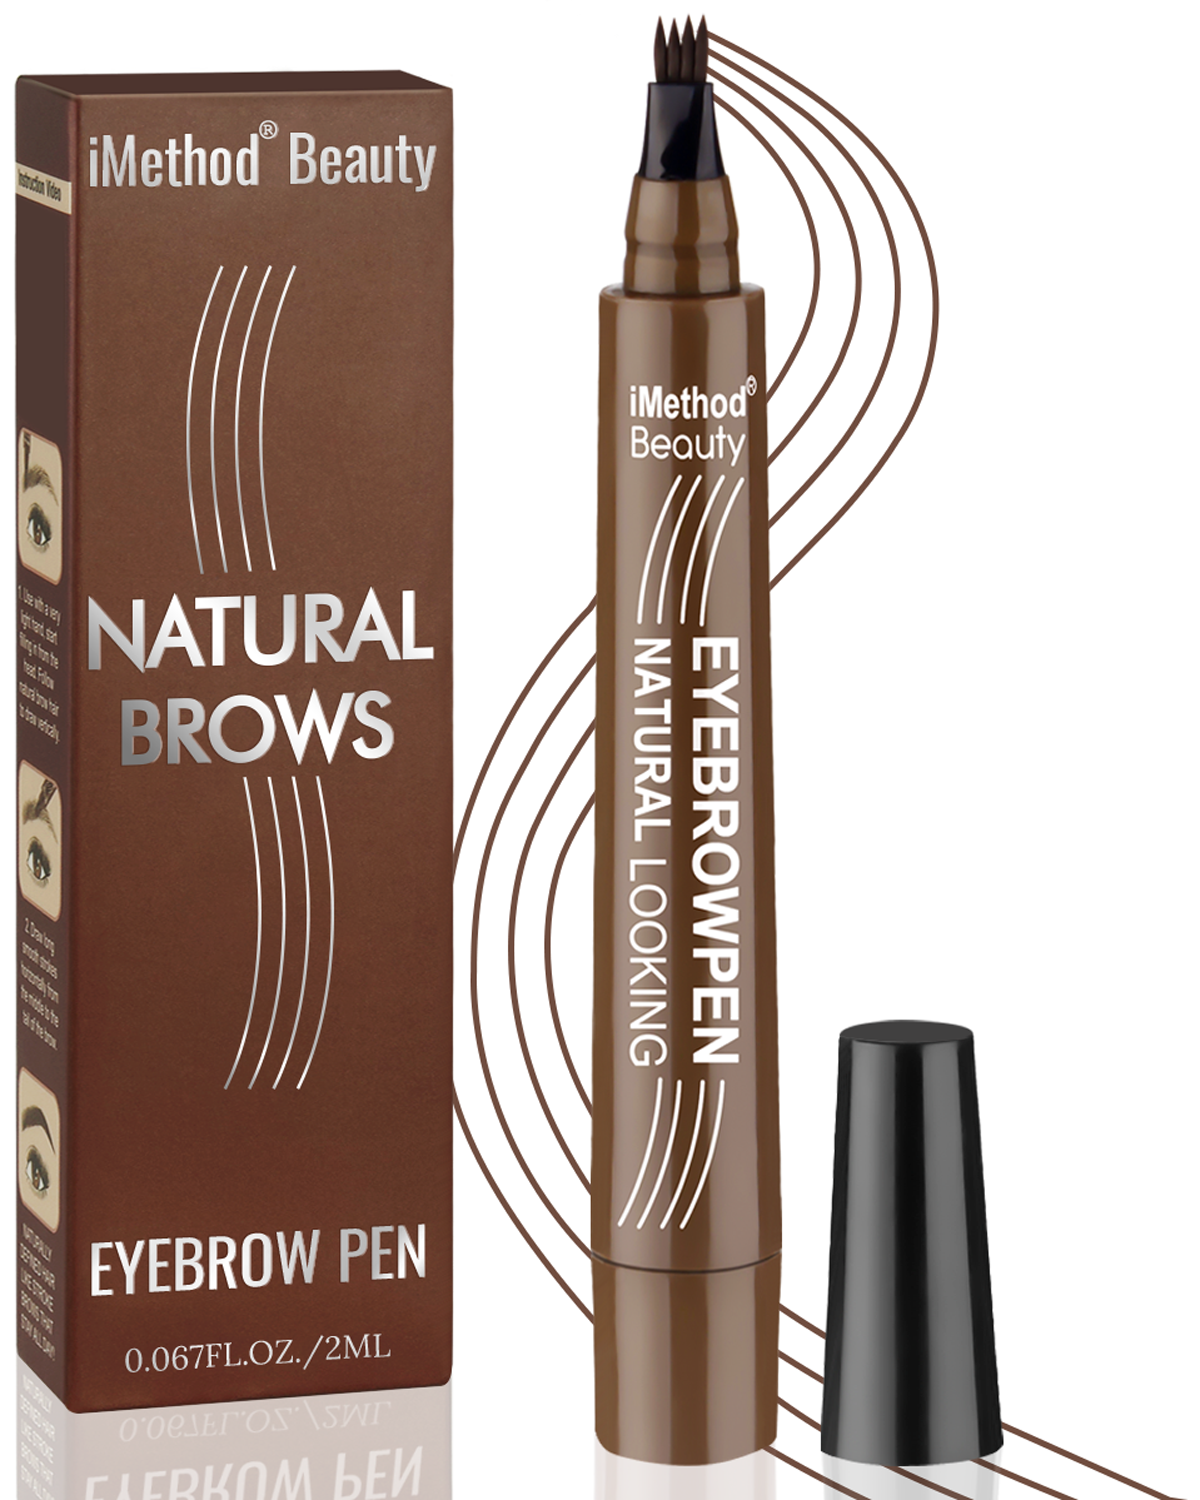 iMethod Beauty Natural Brows Eyebrow Pen